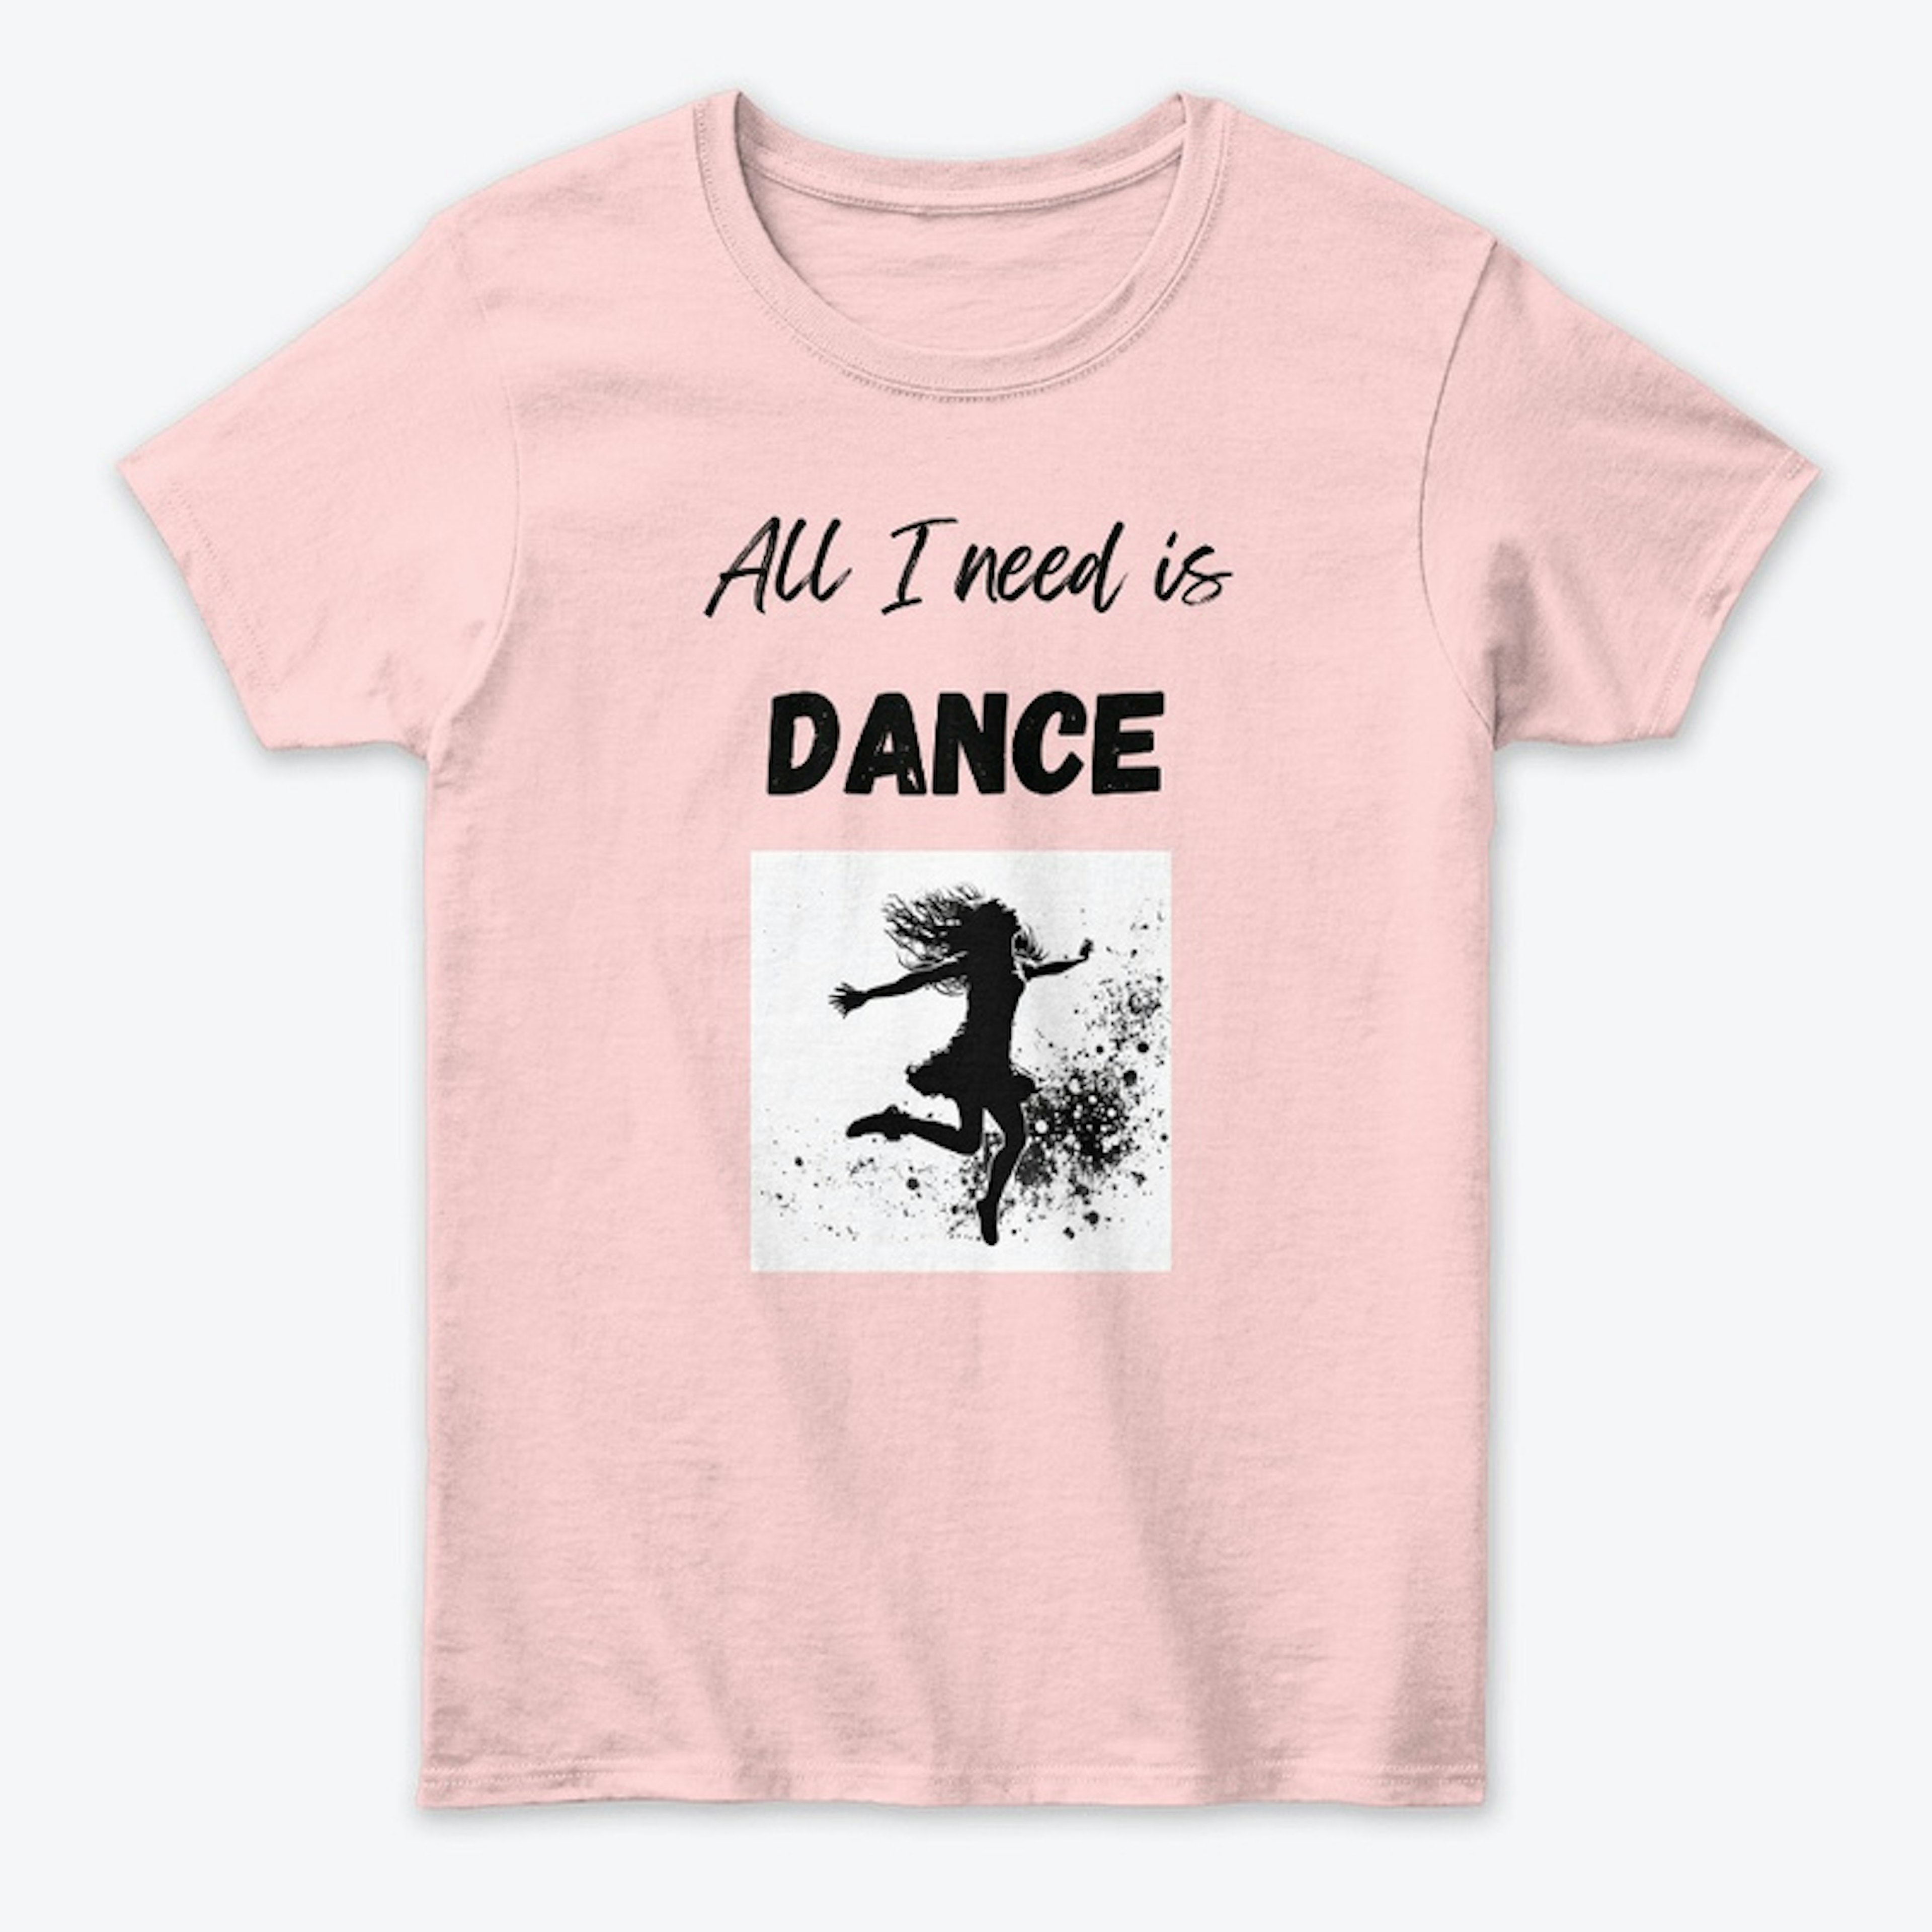 Dance! All I Need is Dance! 